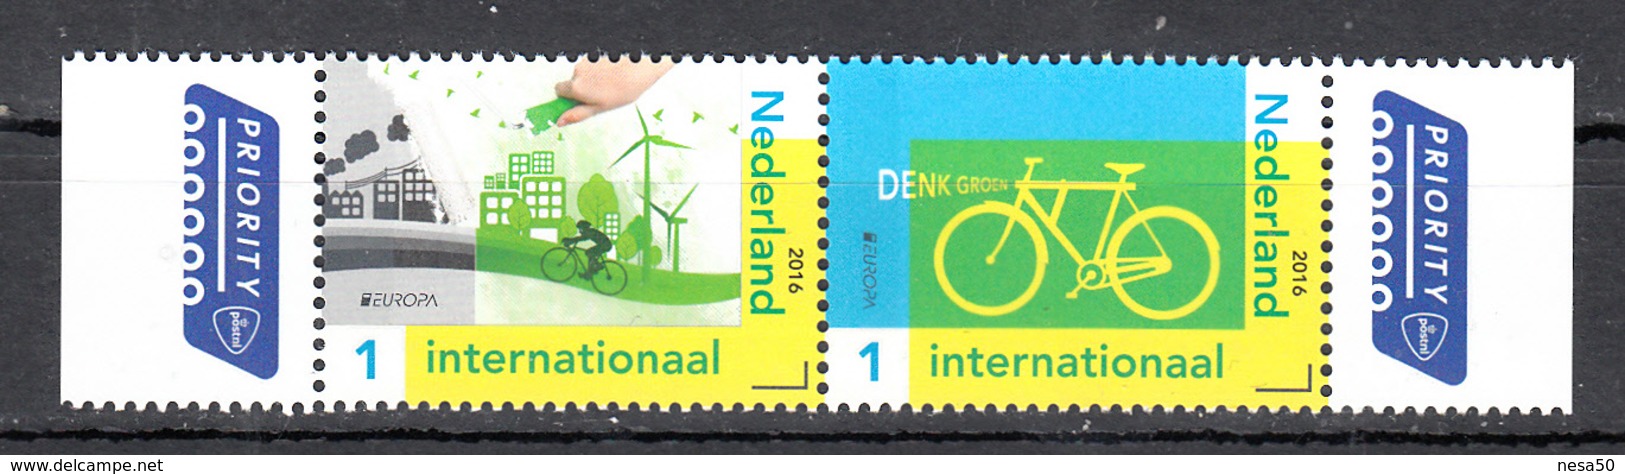 Nederland 2016 Nvph Nr 3399 + 3400, Mi Nr 3457 + 3458 ; Denk Groen; Europa; Fiets, Bike Postfris - Ongebruikt